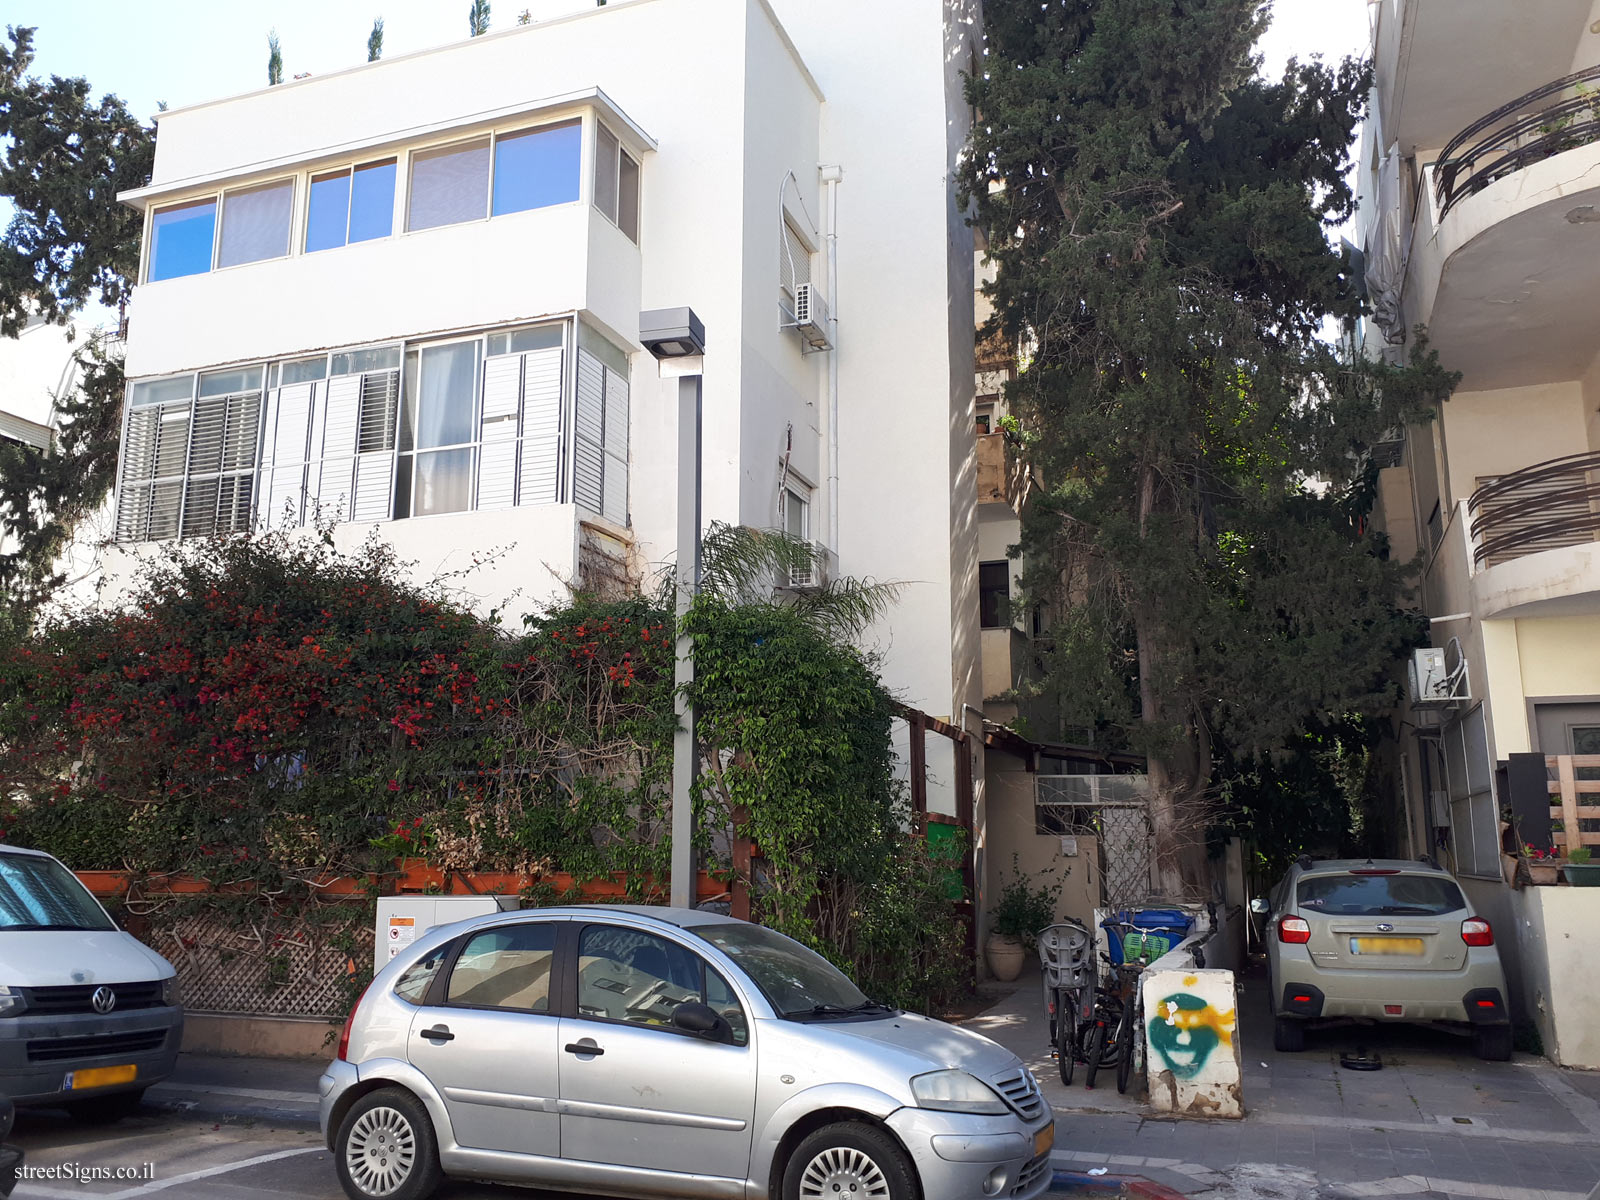 The house of Avraham Chalfi - Israelis St 10, Tel Aviv-Yafo, Israel